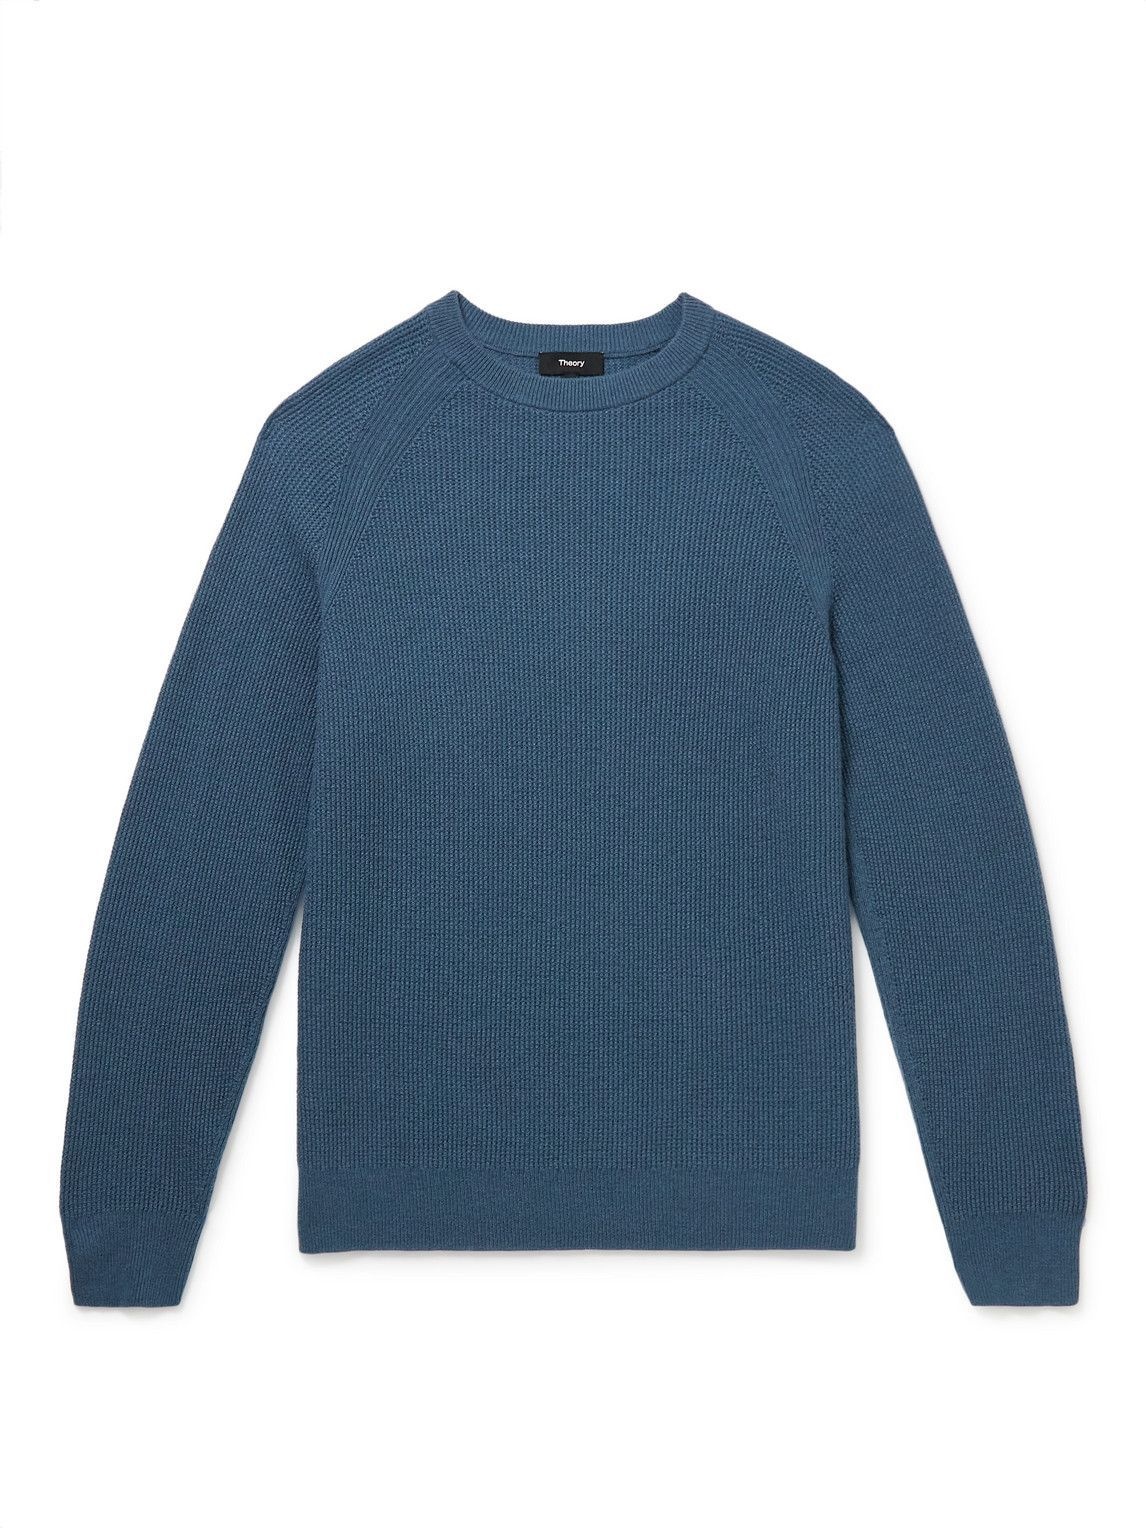 Theory - Toby Waffle-Knit Cashmere Sweater - Blue Theory